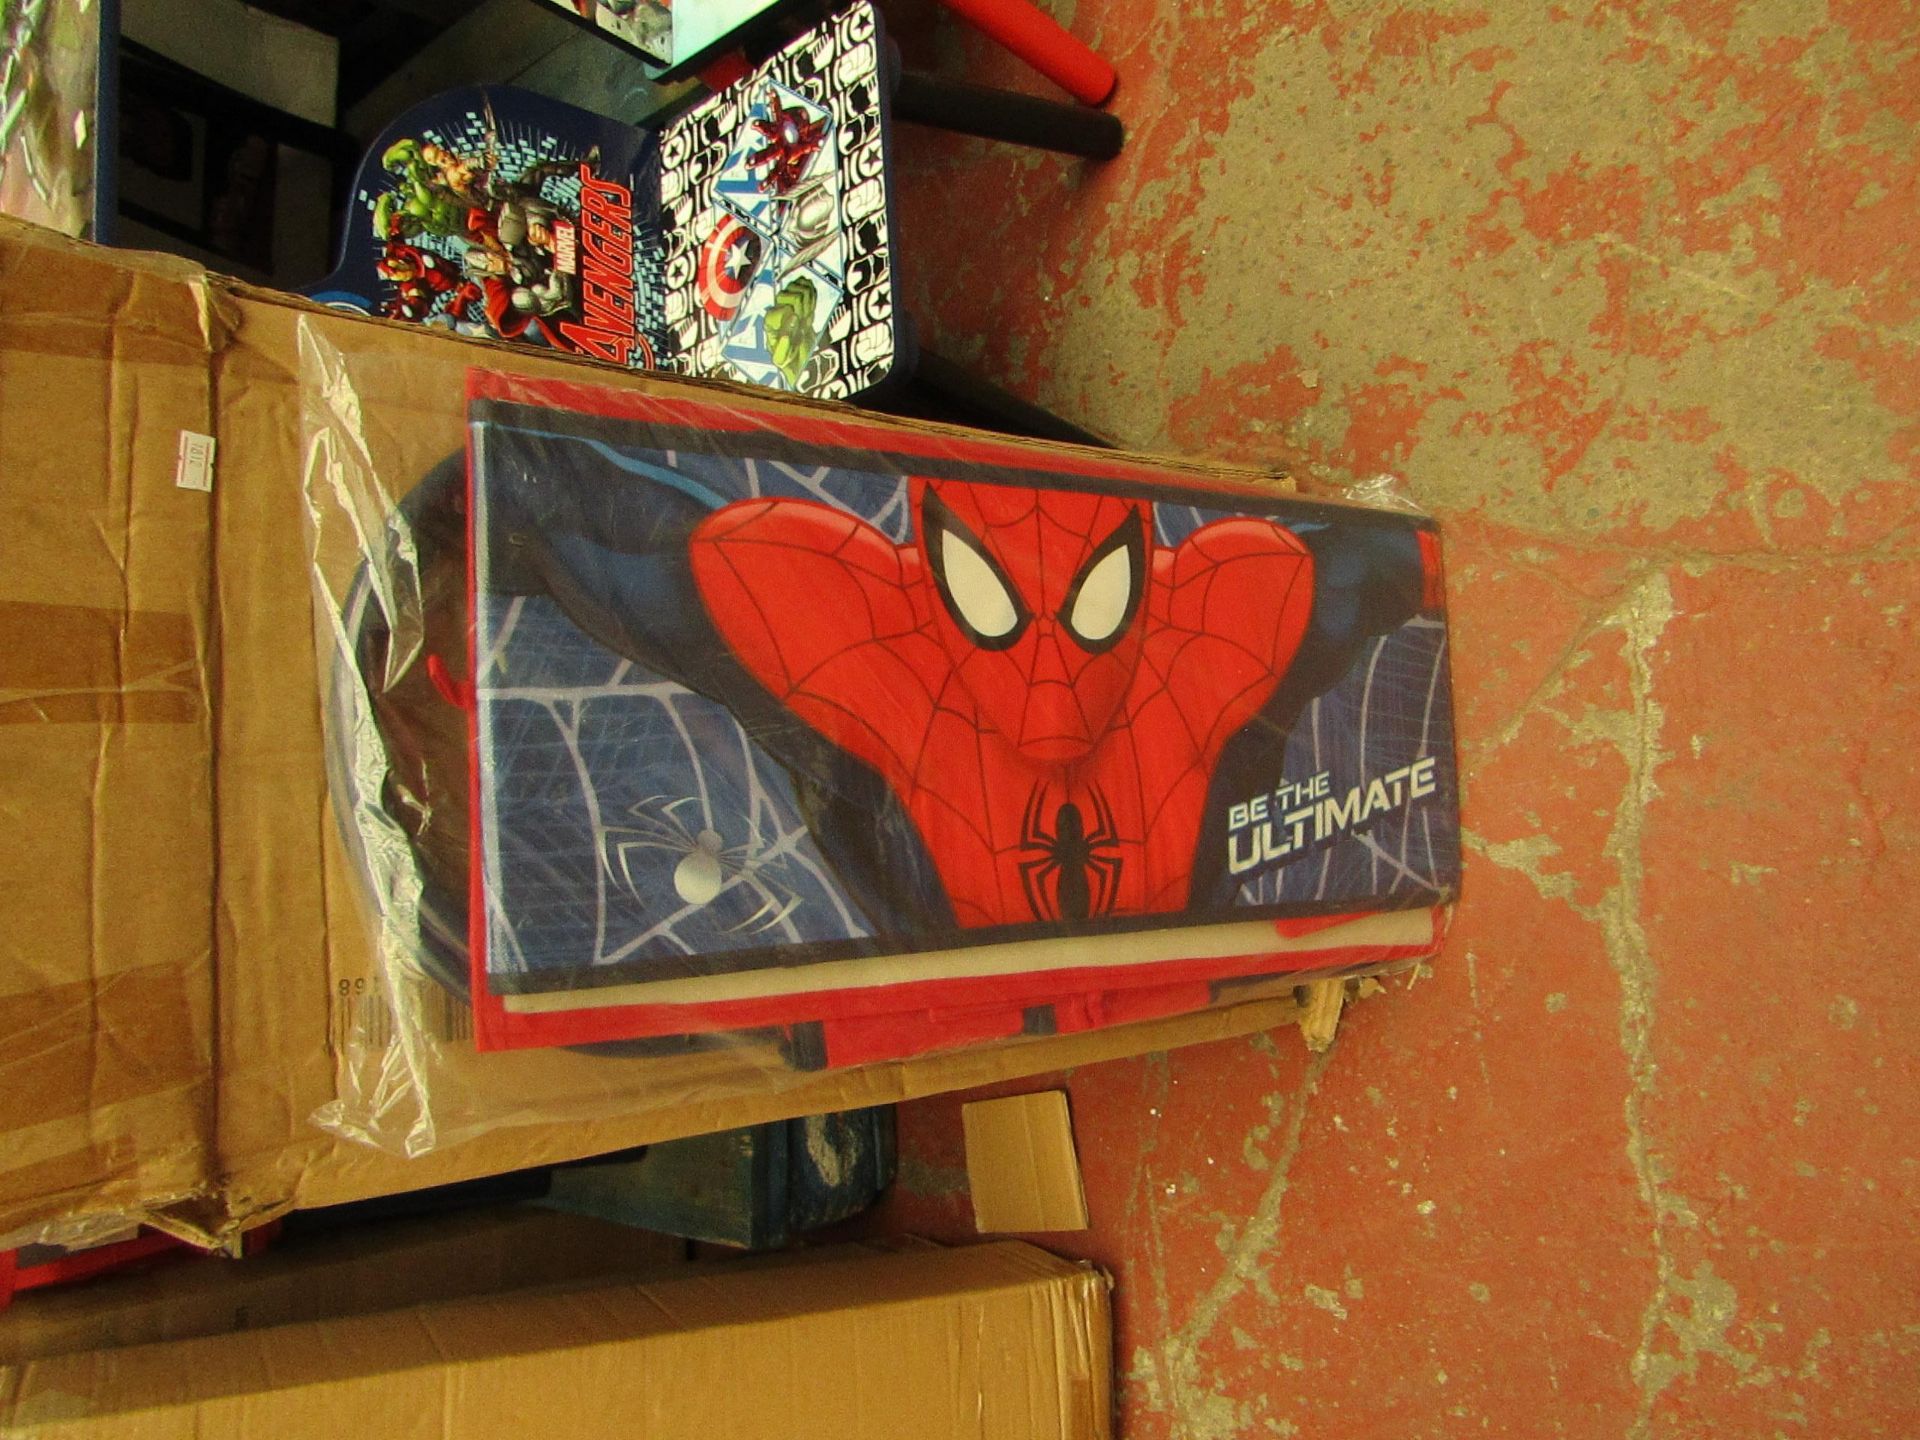 Spider-Man - Metal Toy Storage Organizer - Box Unchecked but looks Complete.